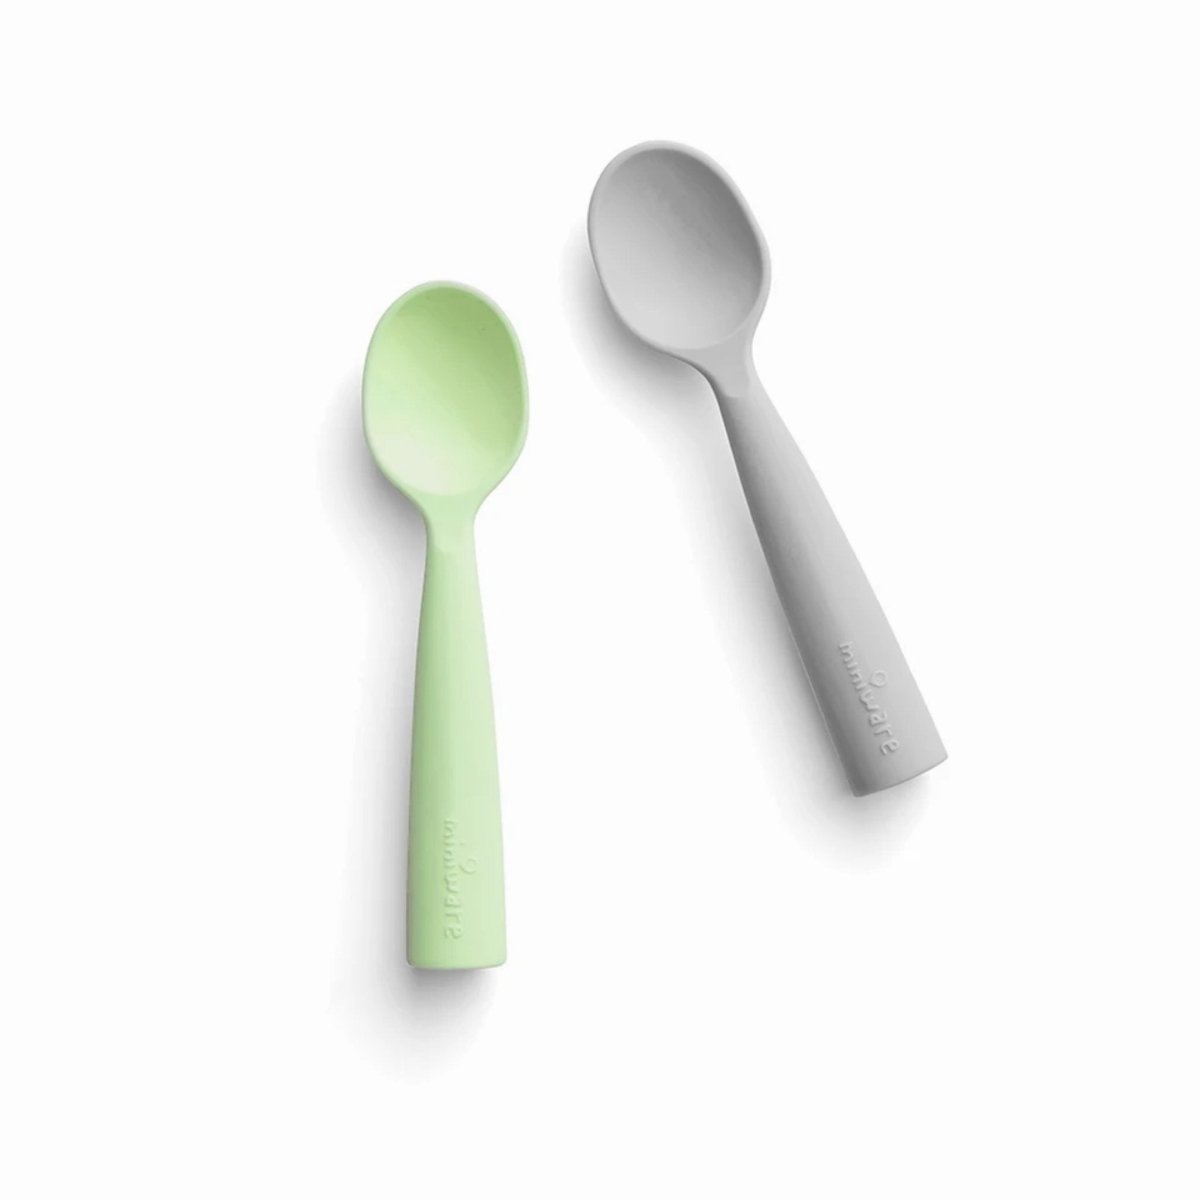 Miniware Training Spoon Set - Grey and Lime - MWTSGK